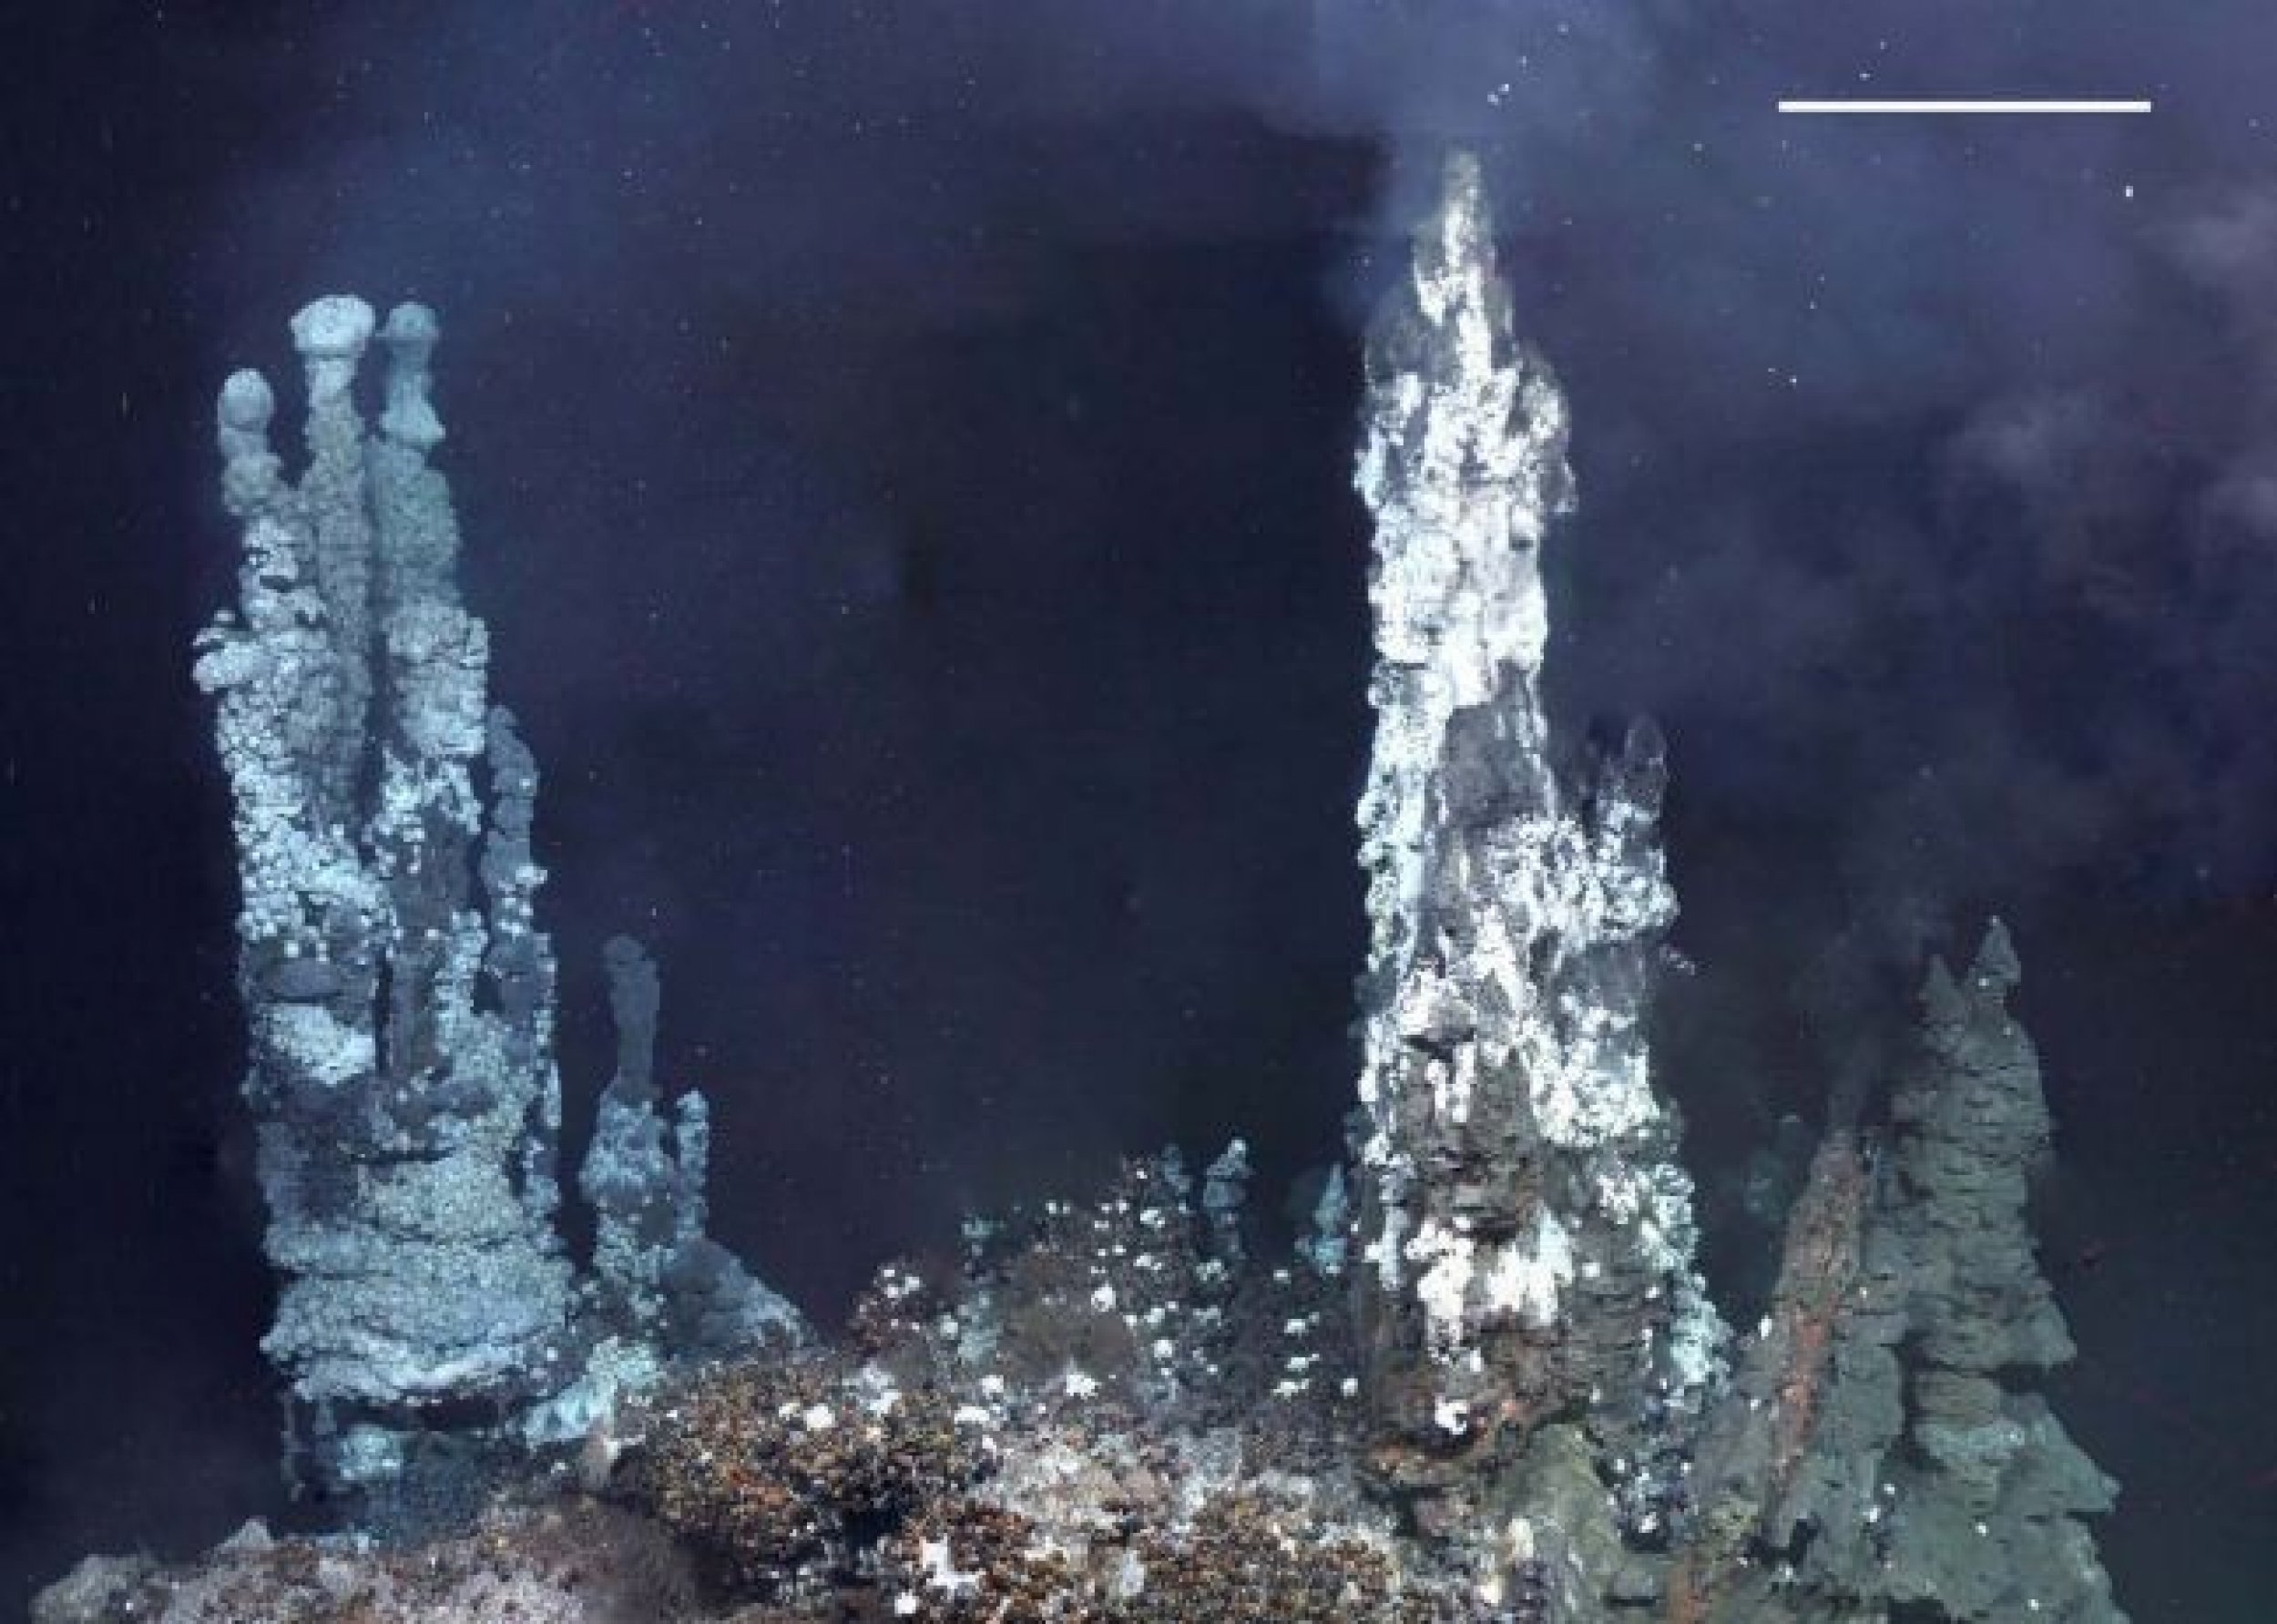 Lost World of Unknown Species Discovered on Dark Antarctic Seafloor